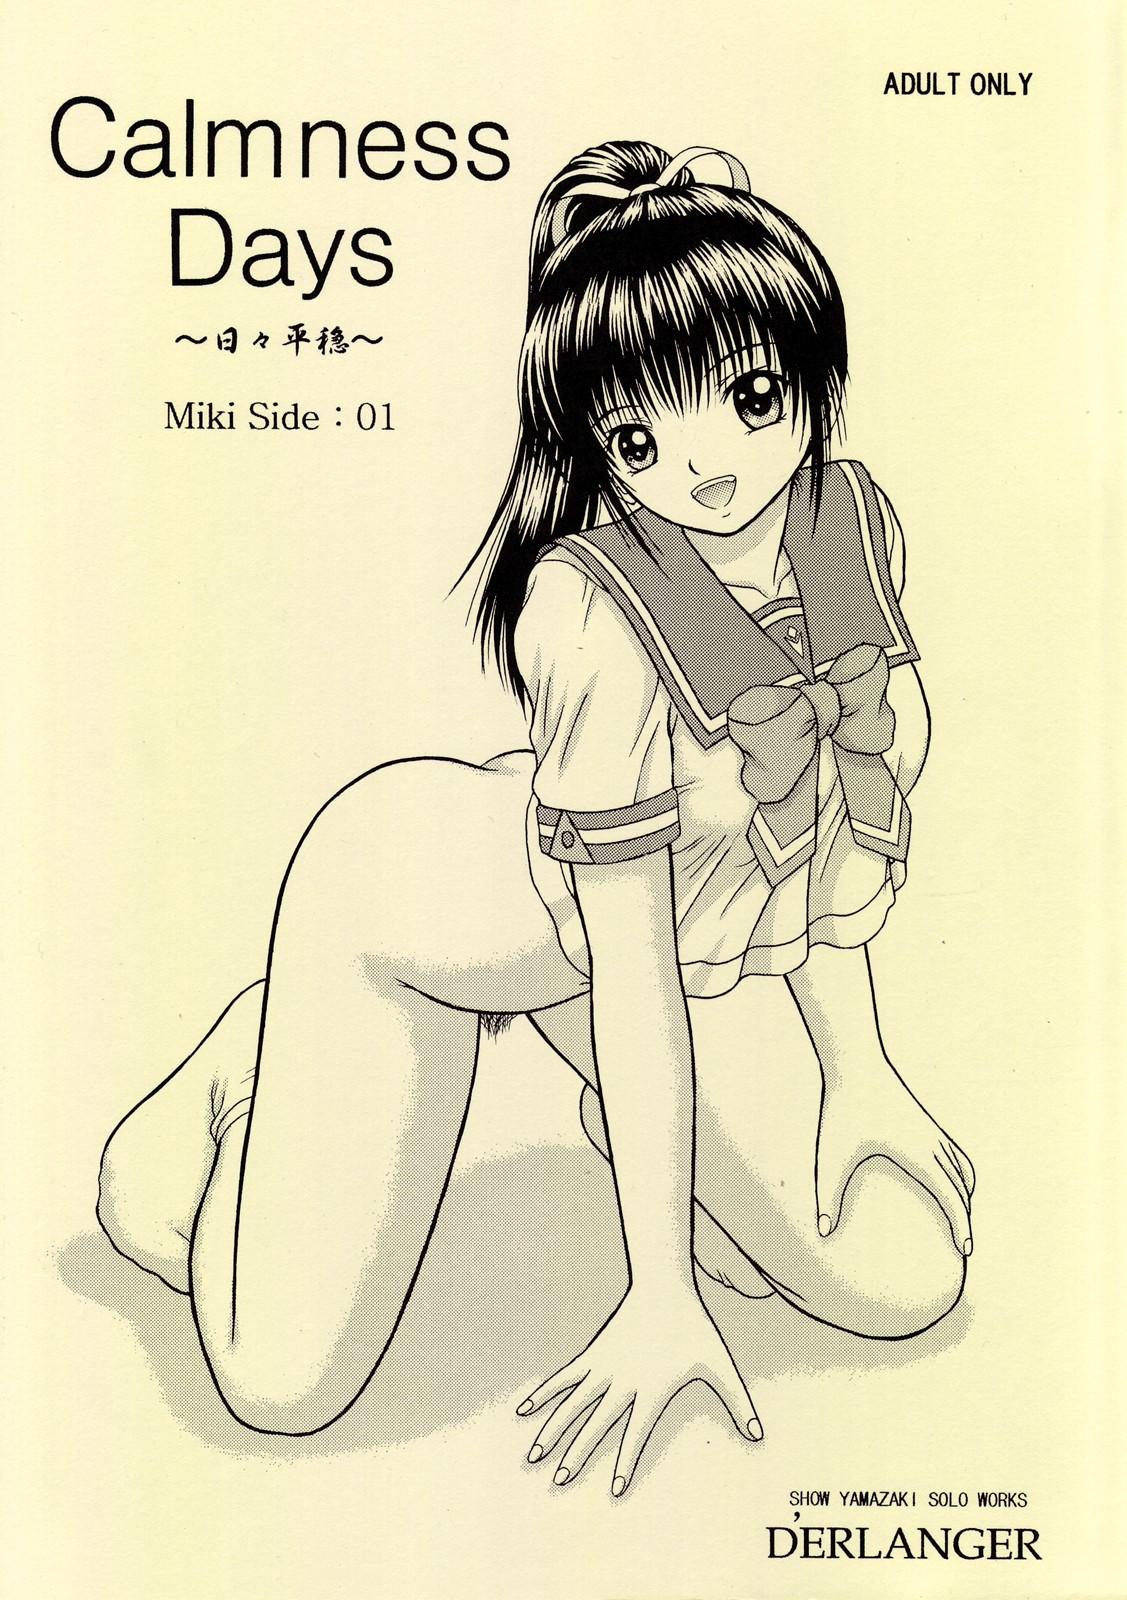 Calmness Days Miki Side:01 0